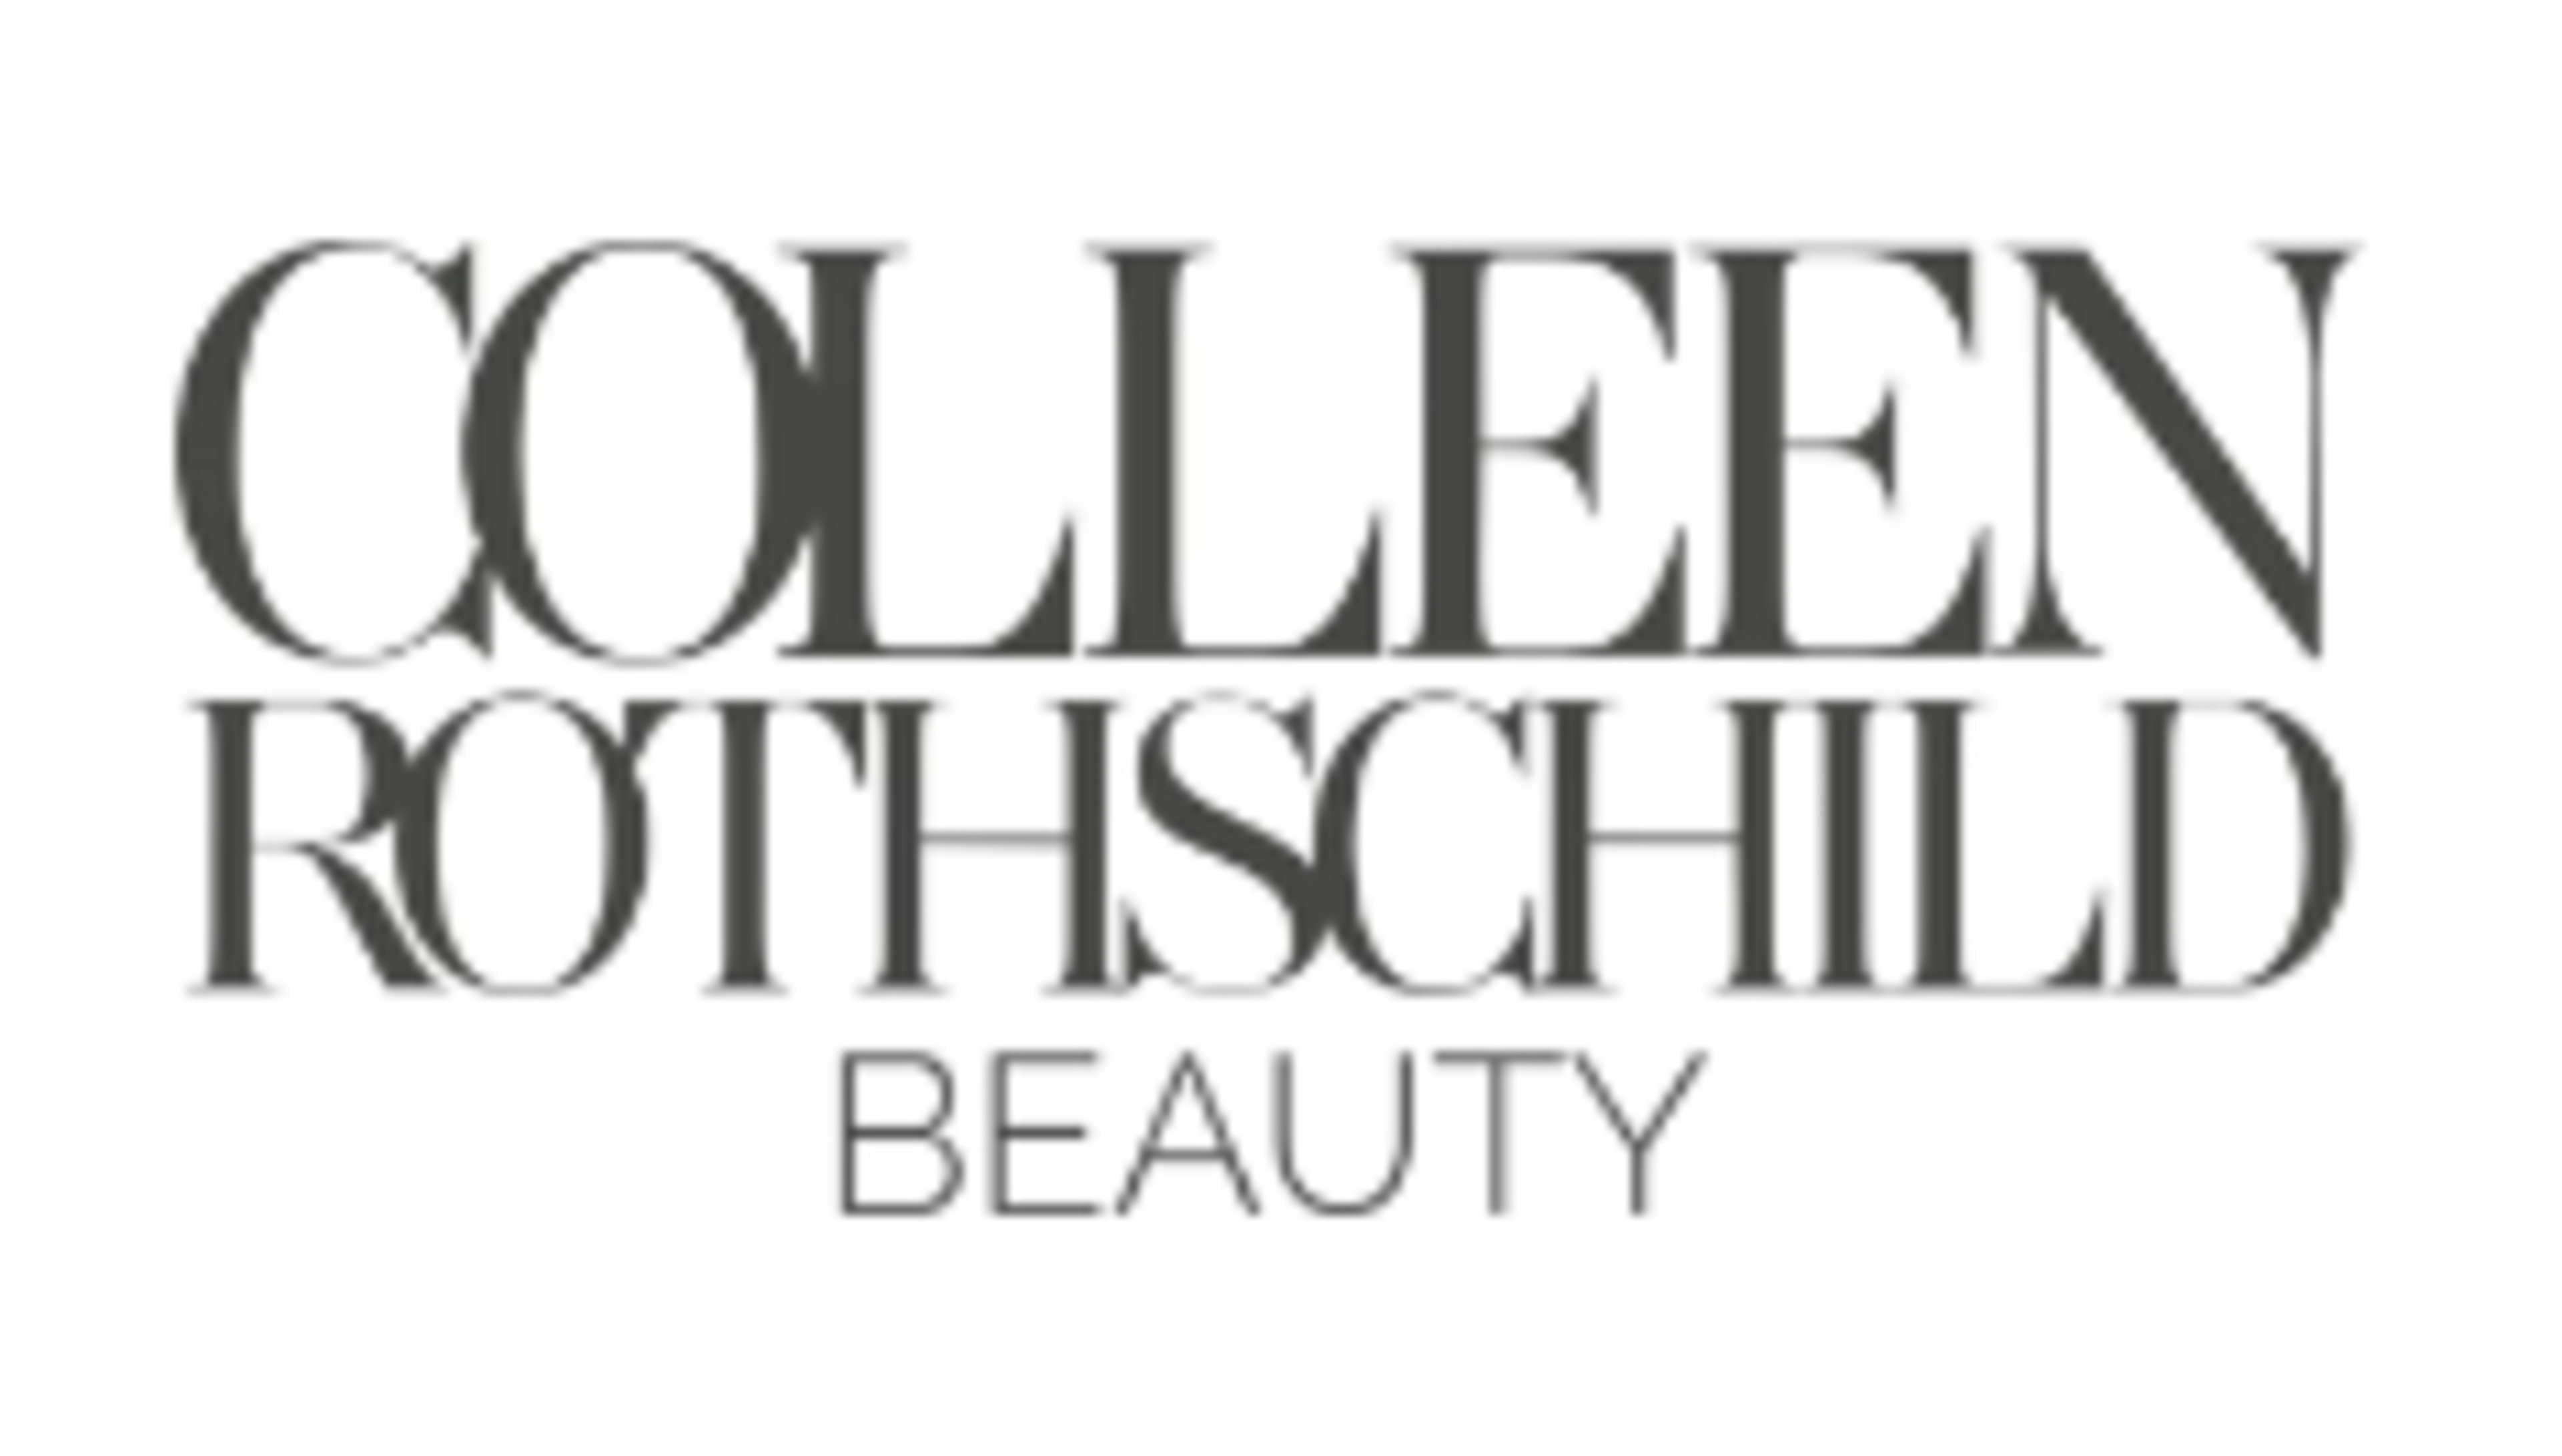 Colleen Rothschild BeautyCode